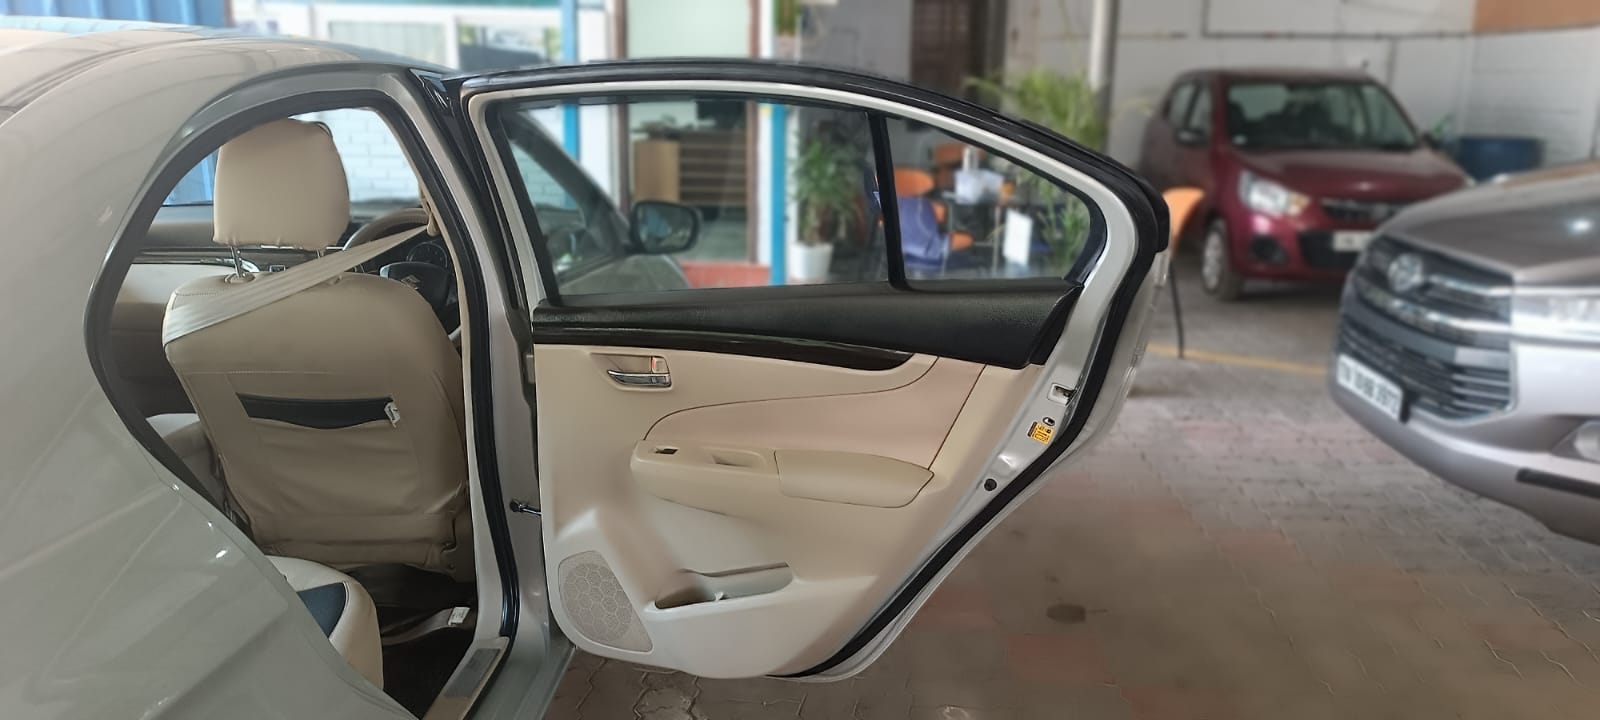 Used-Maruti Suzuki-Ciaz-smart_hybrid-Cars-in-Madurai-Second-Maruti Suzuki-Ciaz-smart_hybrid-Cars-in-Madurai-Per-Owned-Maruti Suzuki-Ciaz-smart_hybrid-Cars-in-Madurai